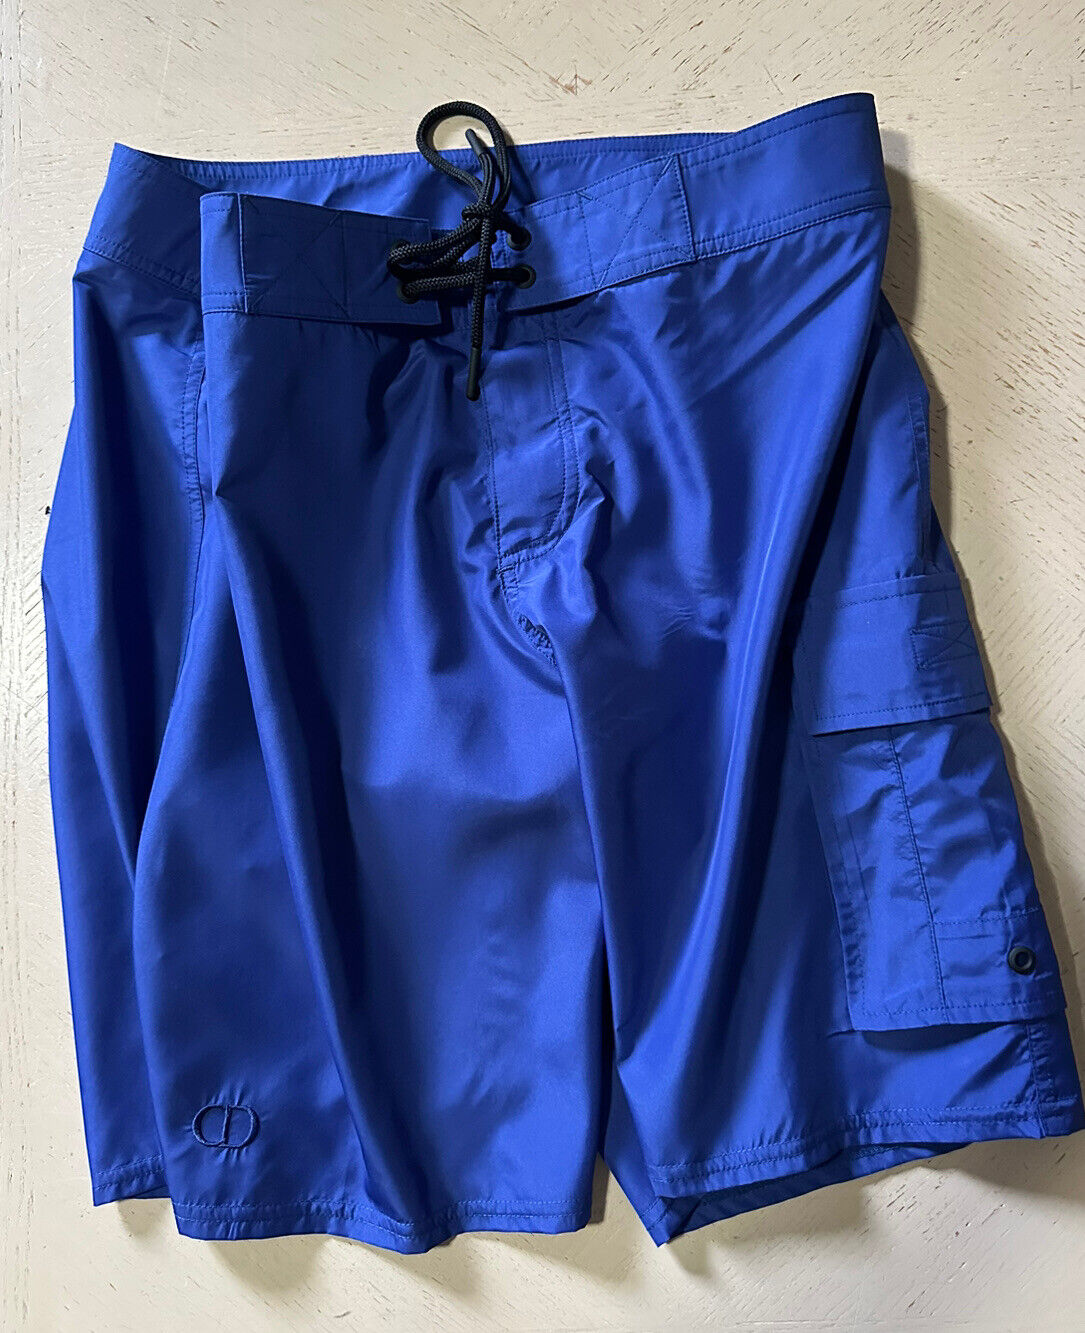 NWT 790 долларов США Шорты для плавания DIOR на шнурке, синие, размер L